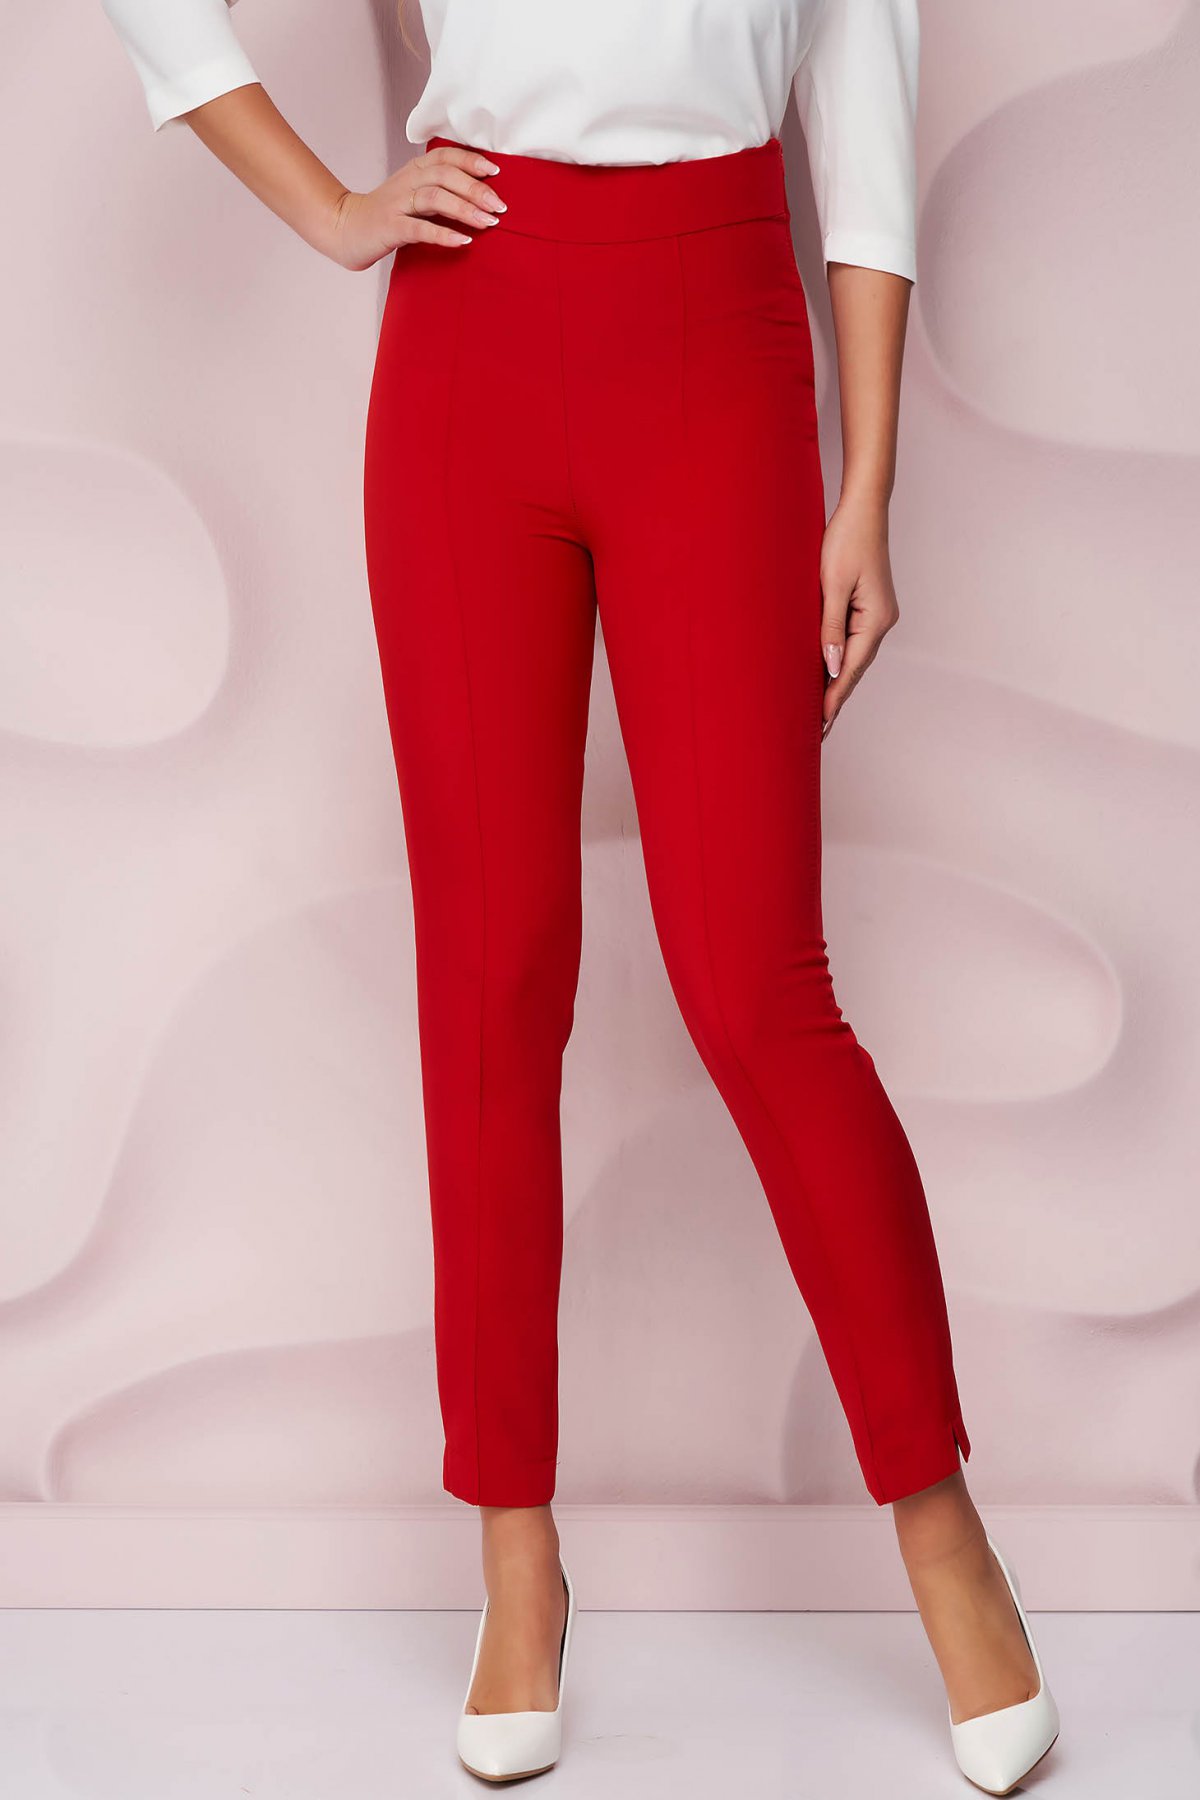 Pantaloni rosii eleganti conici cu talie inalta din stofa starshiners.ro imagine noua